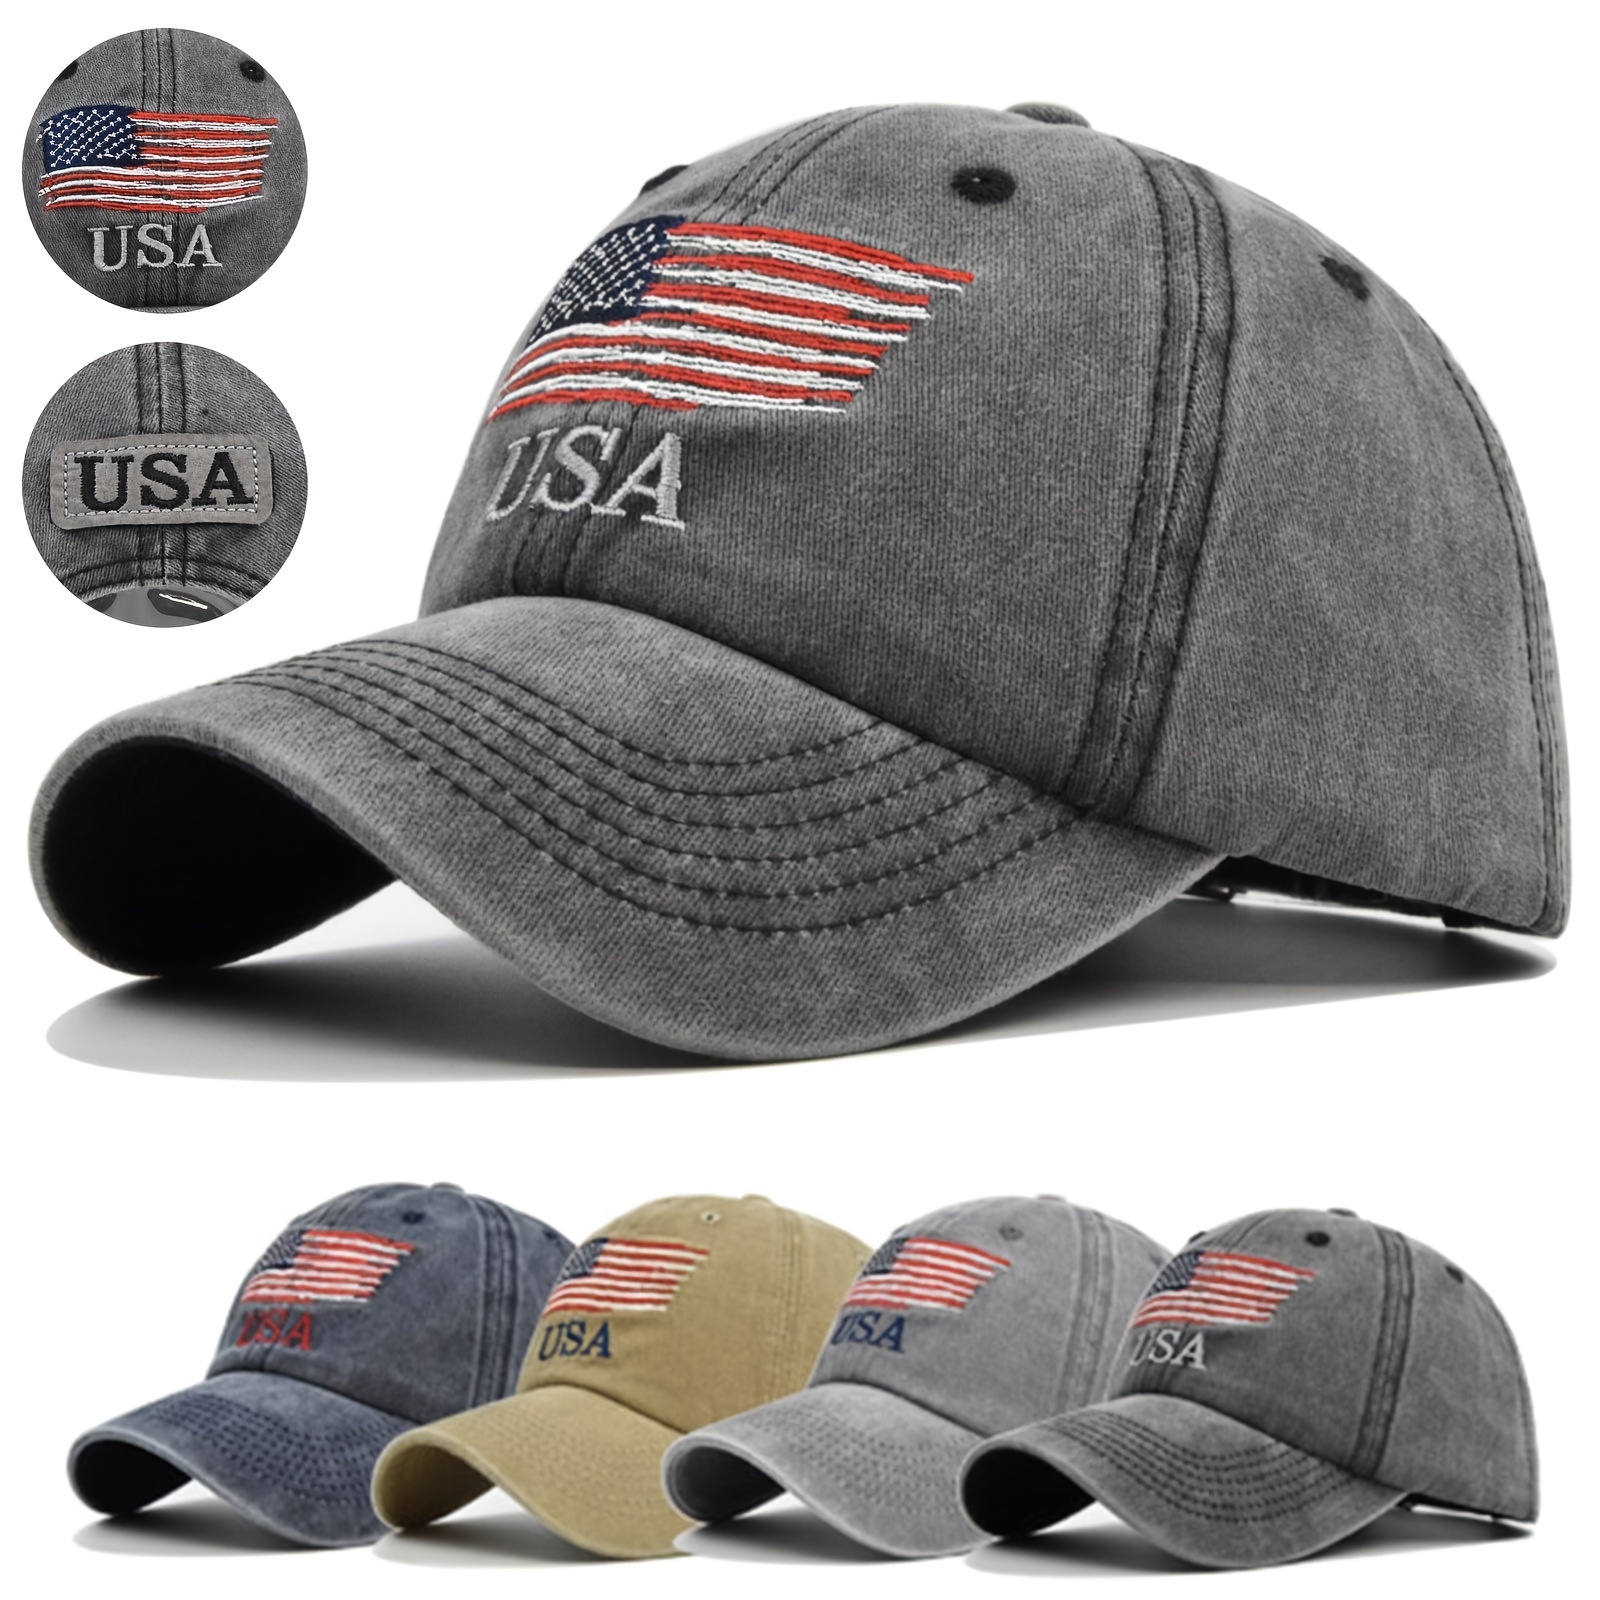 American Flag Hat, Patriotic Hat, USA Flag Hat, Stars and Stripes